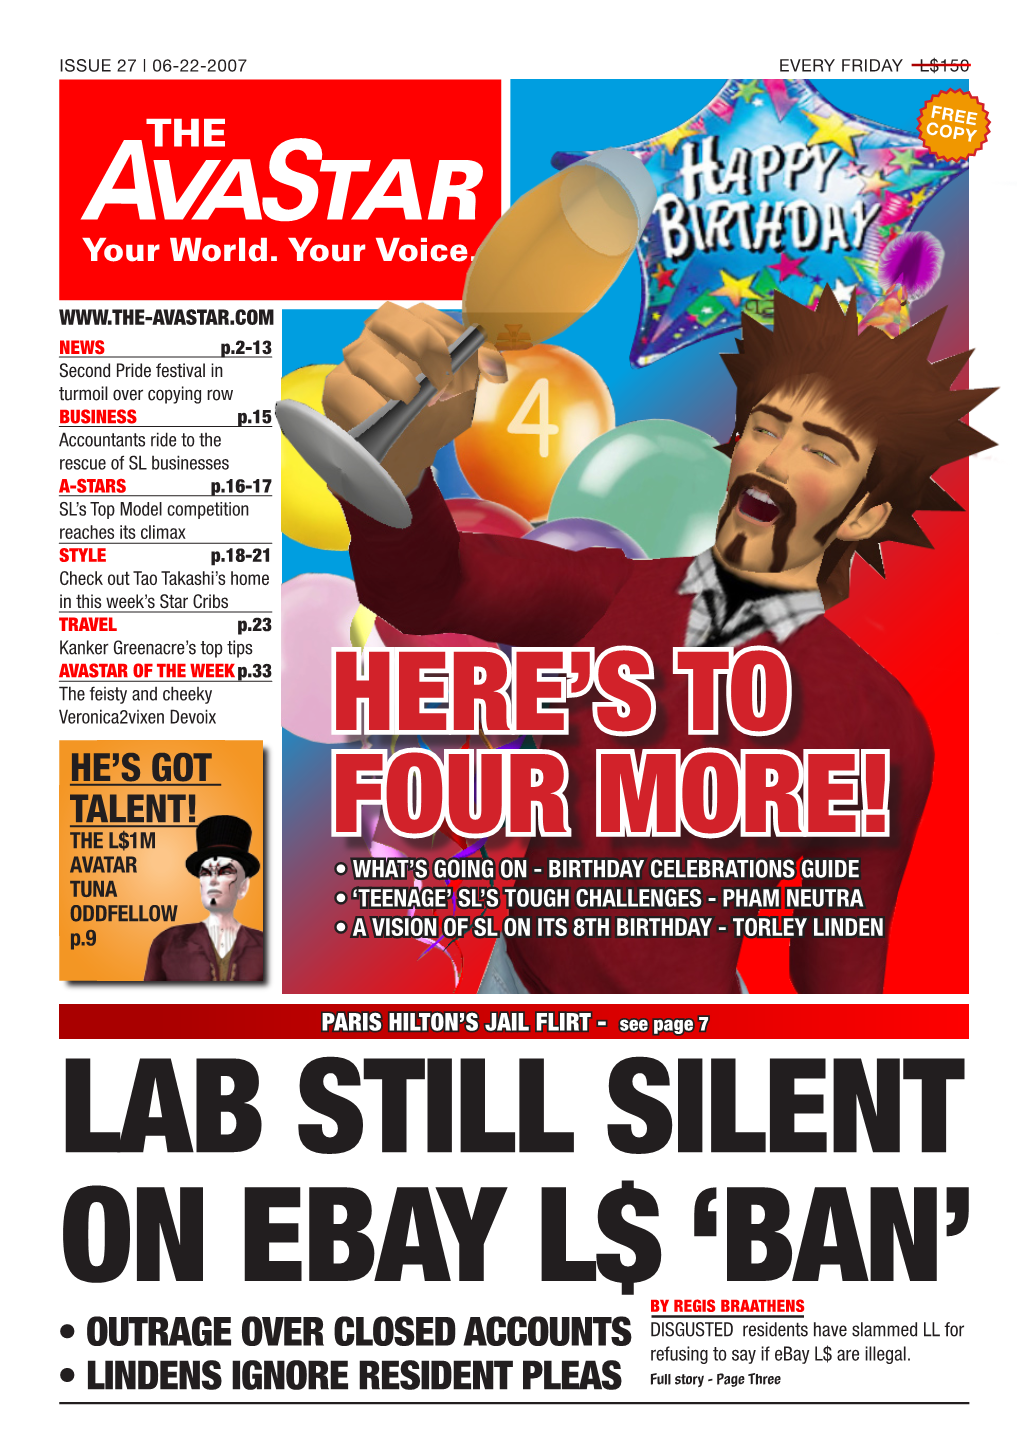 Lab Still Silent on Ebay L$ 'Ban'